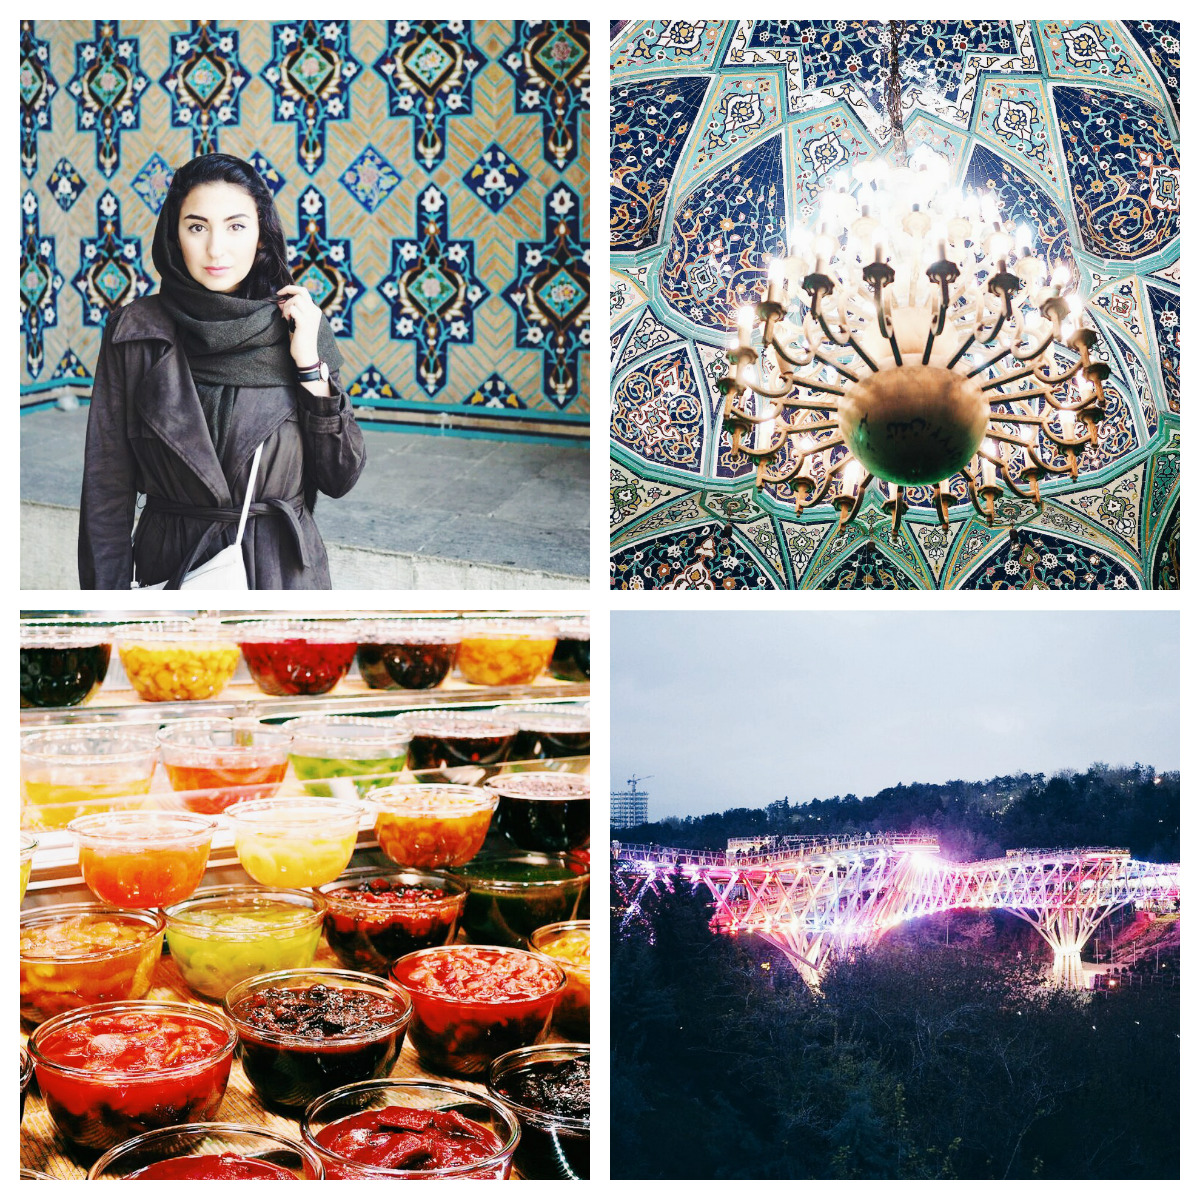 travelling iran reiseblog reise travel iran tehran teheran experiences erfahrungen